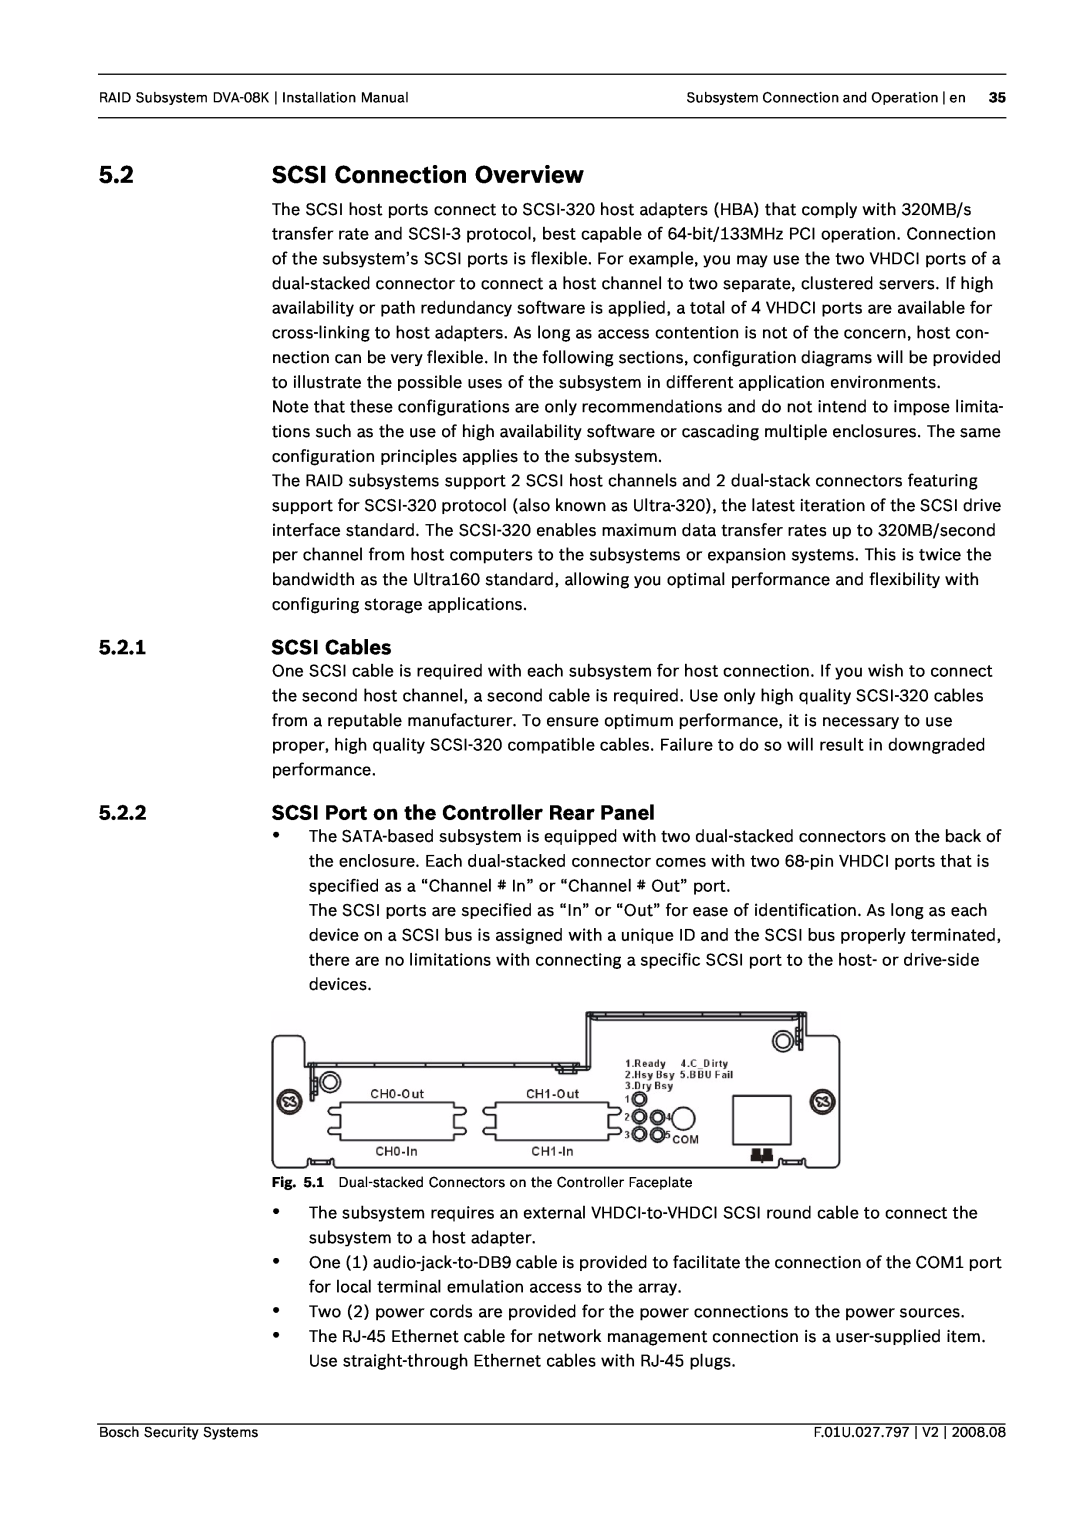 Bosch Appliances DVA-08K manual SCSI Connection Overview, 5.2.1, SCSI Cables, 5.2.2, SCSI Port on the Controller Rear Panel 